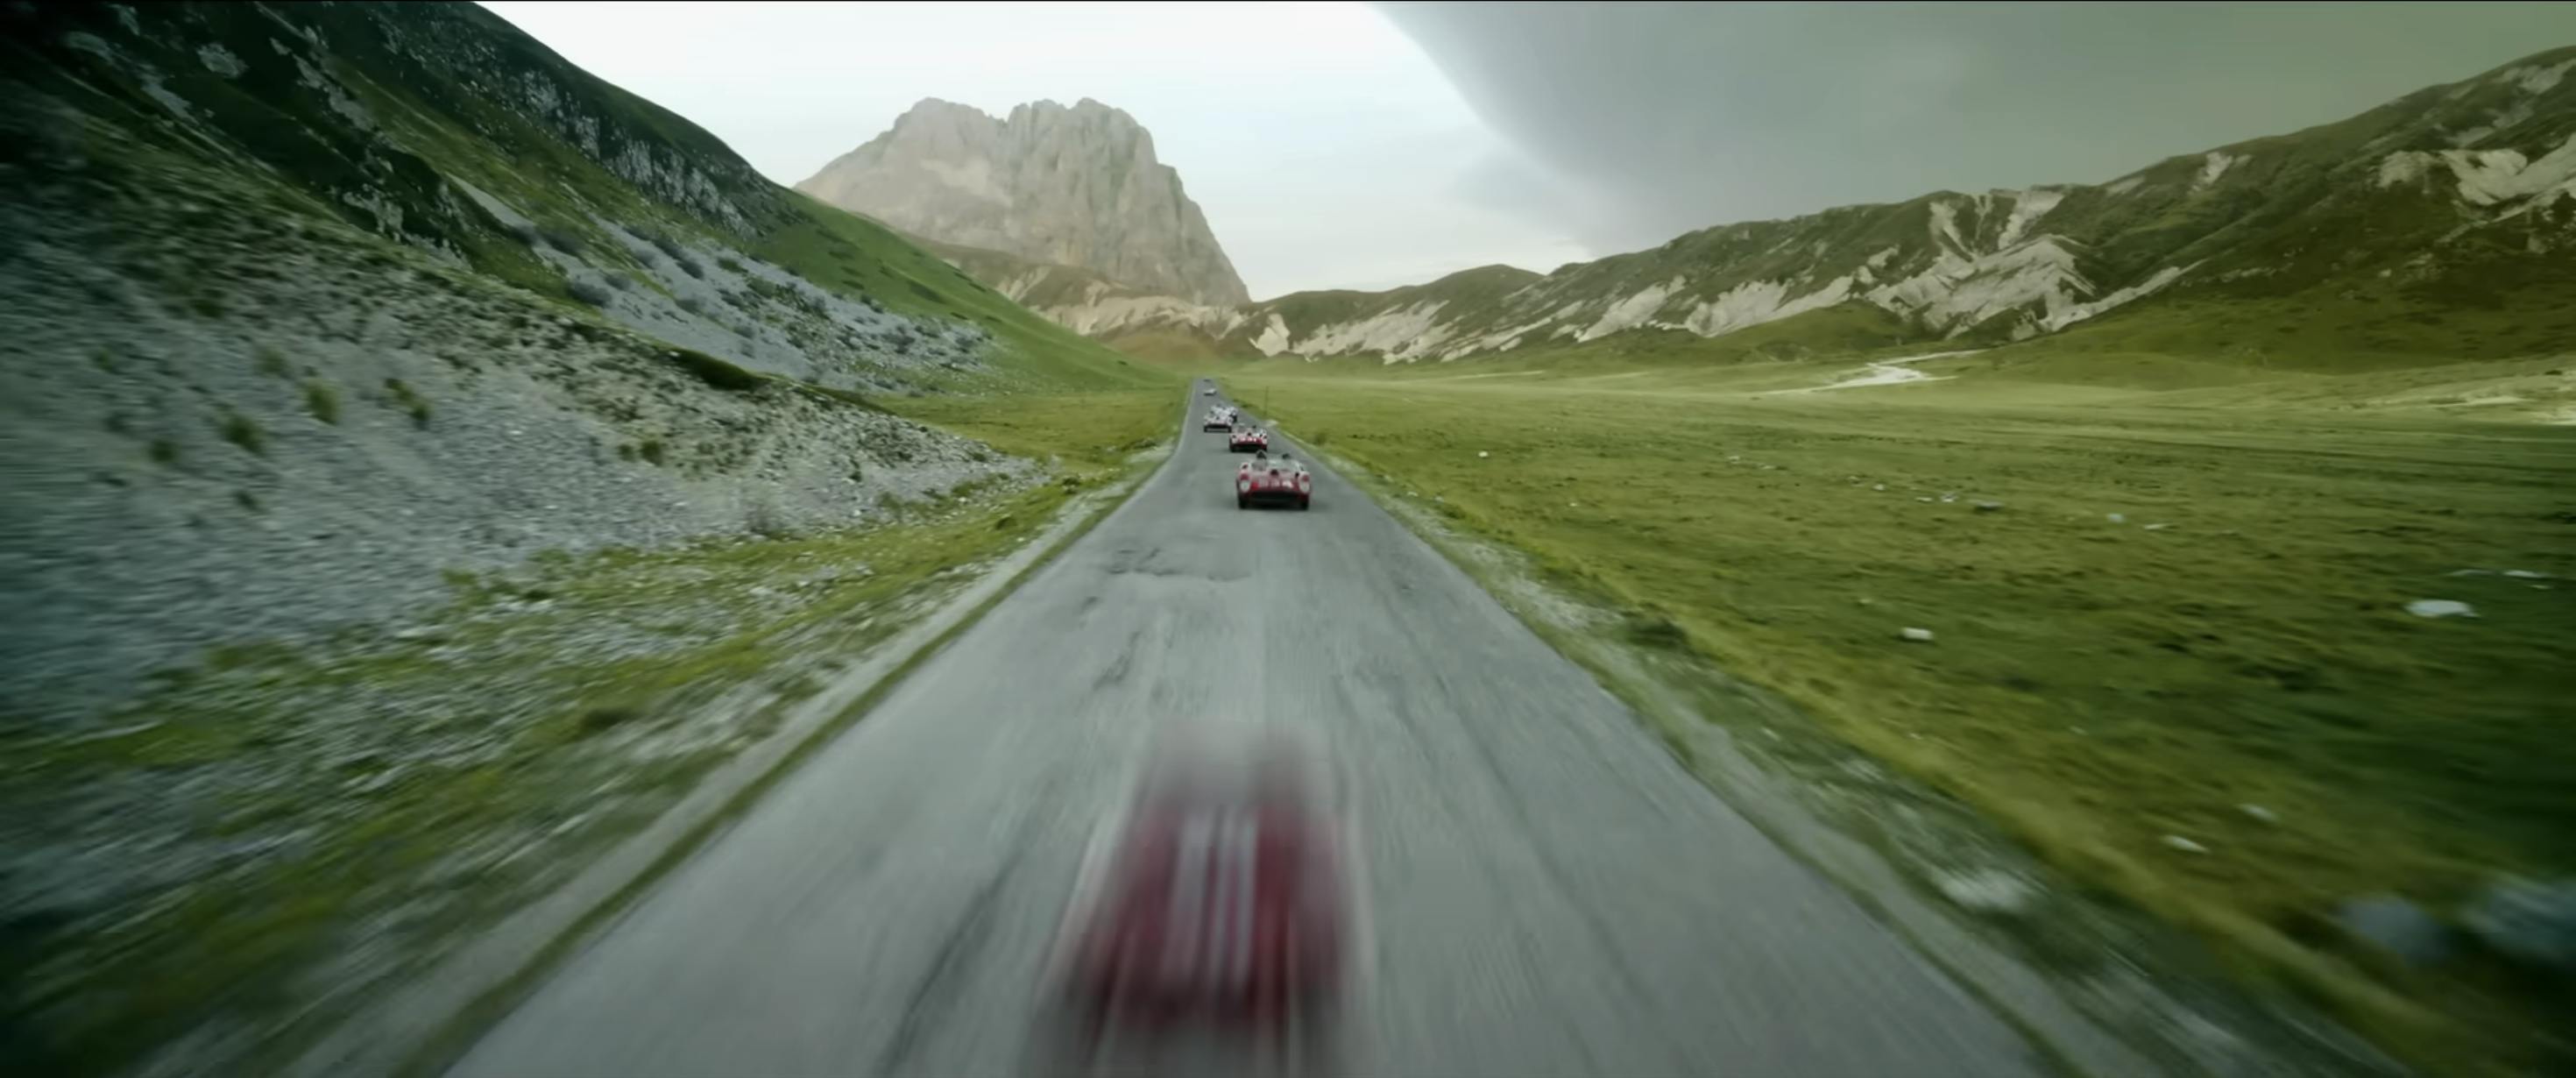 Ferrari film racing action still mountain range